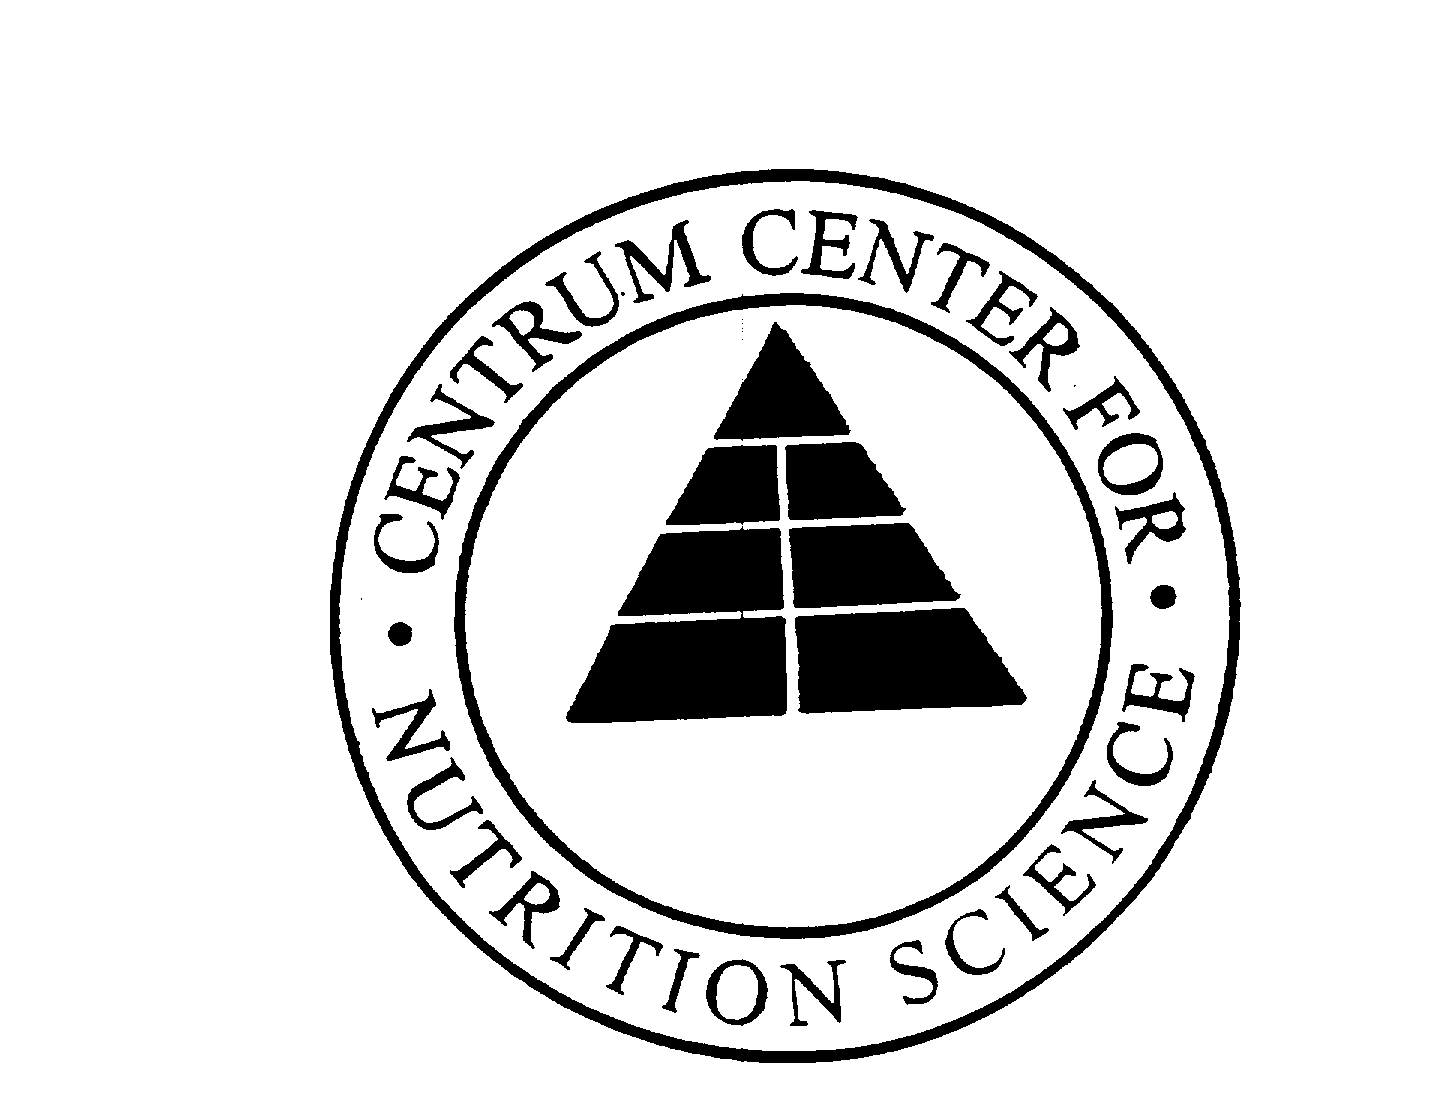 CENTRUM CENTER FOR NUTRITION SCIENCE